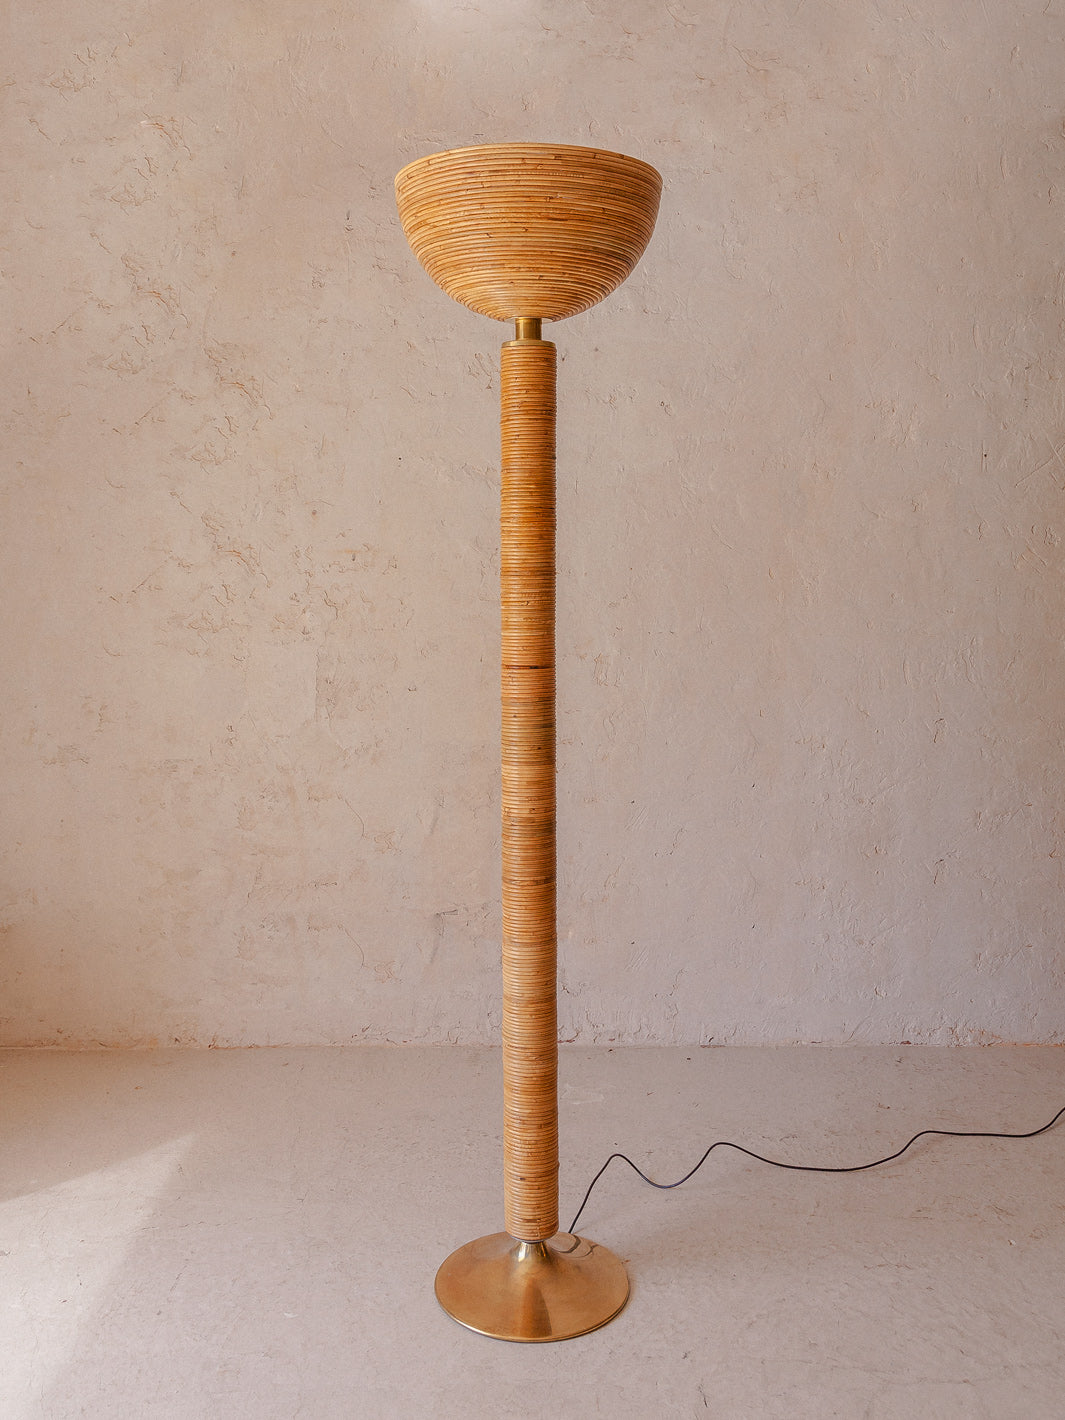 Italian handmade brass and bamboo floor lamp